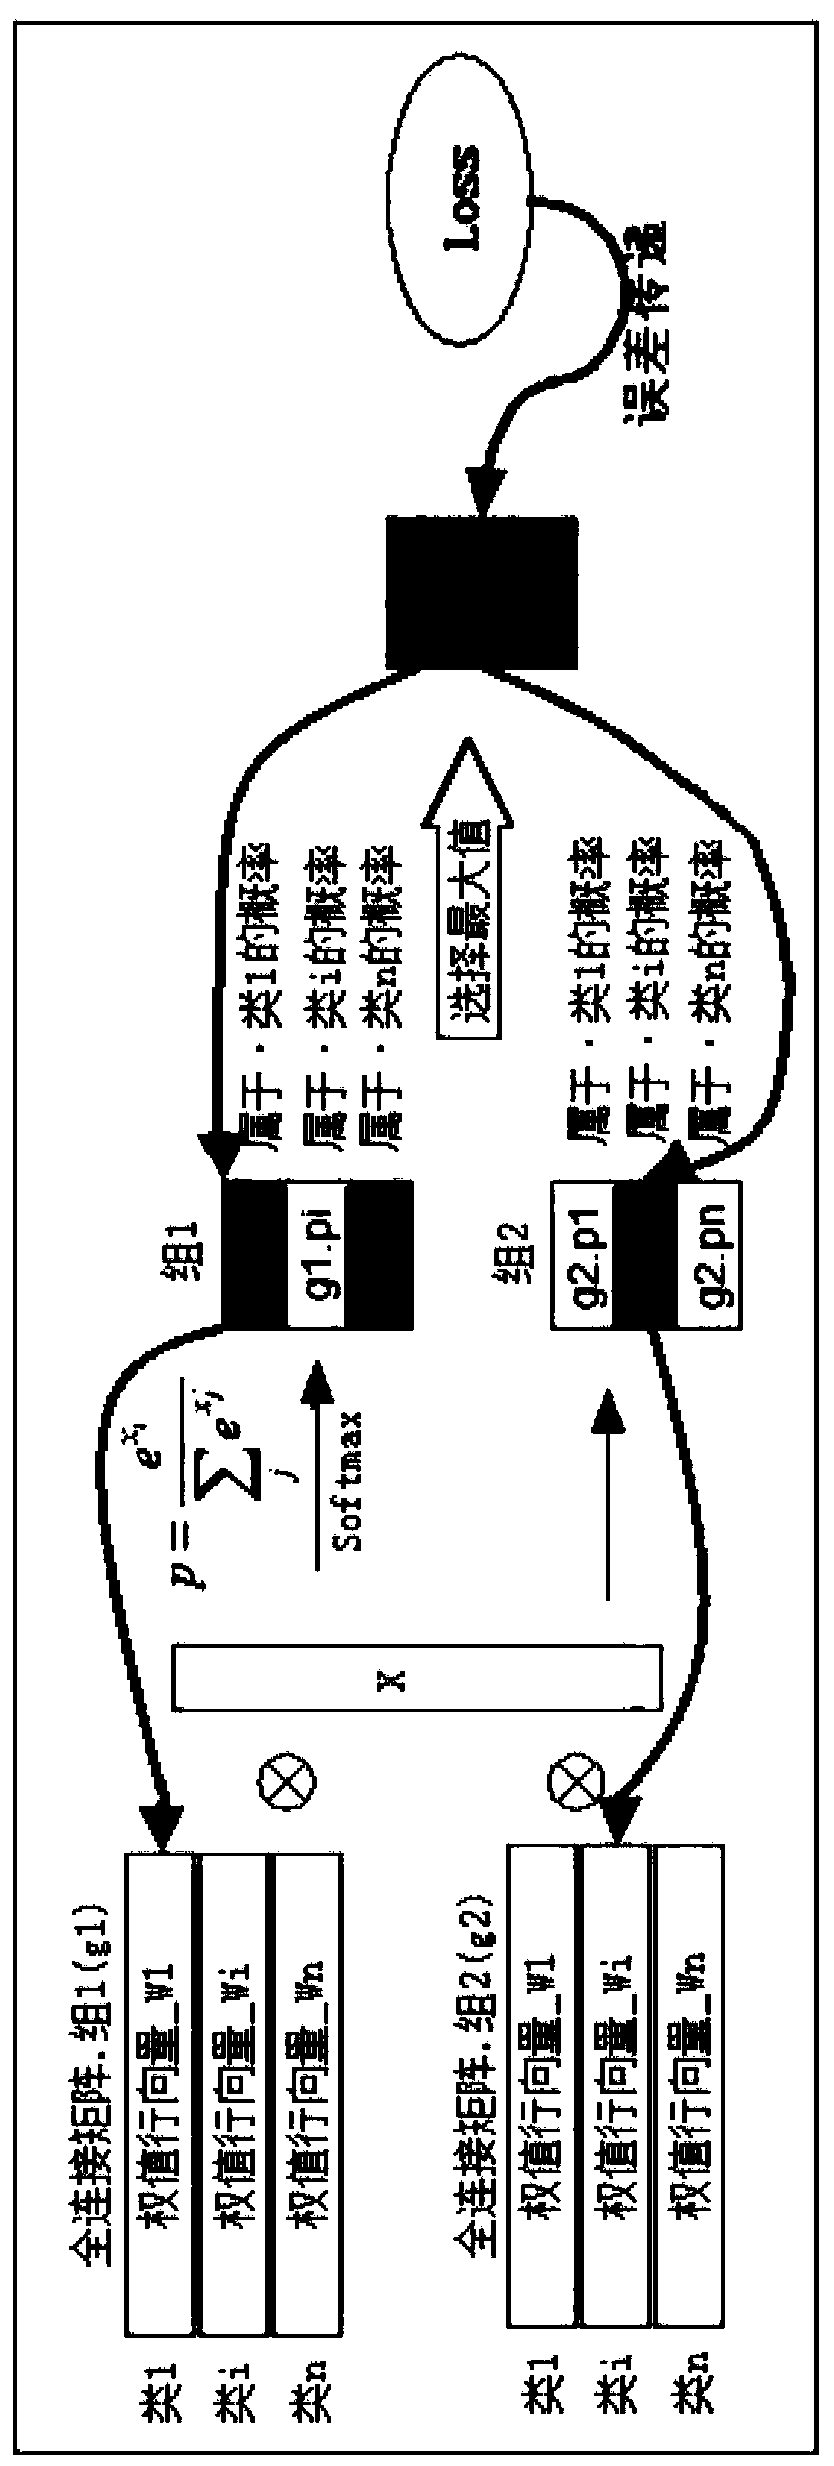 Design method of multi-class center classification network model